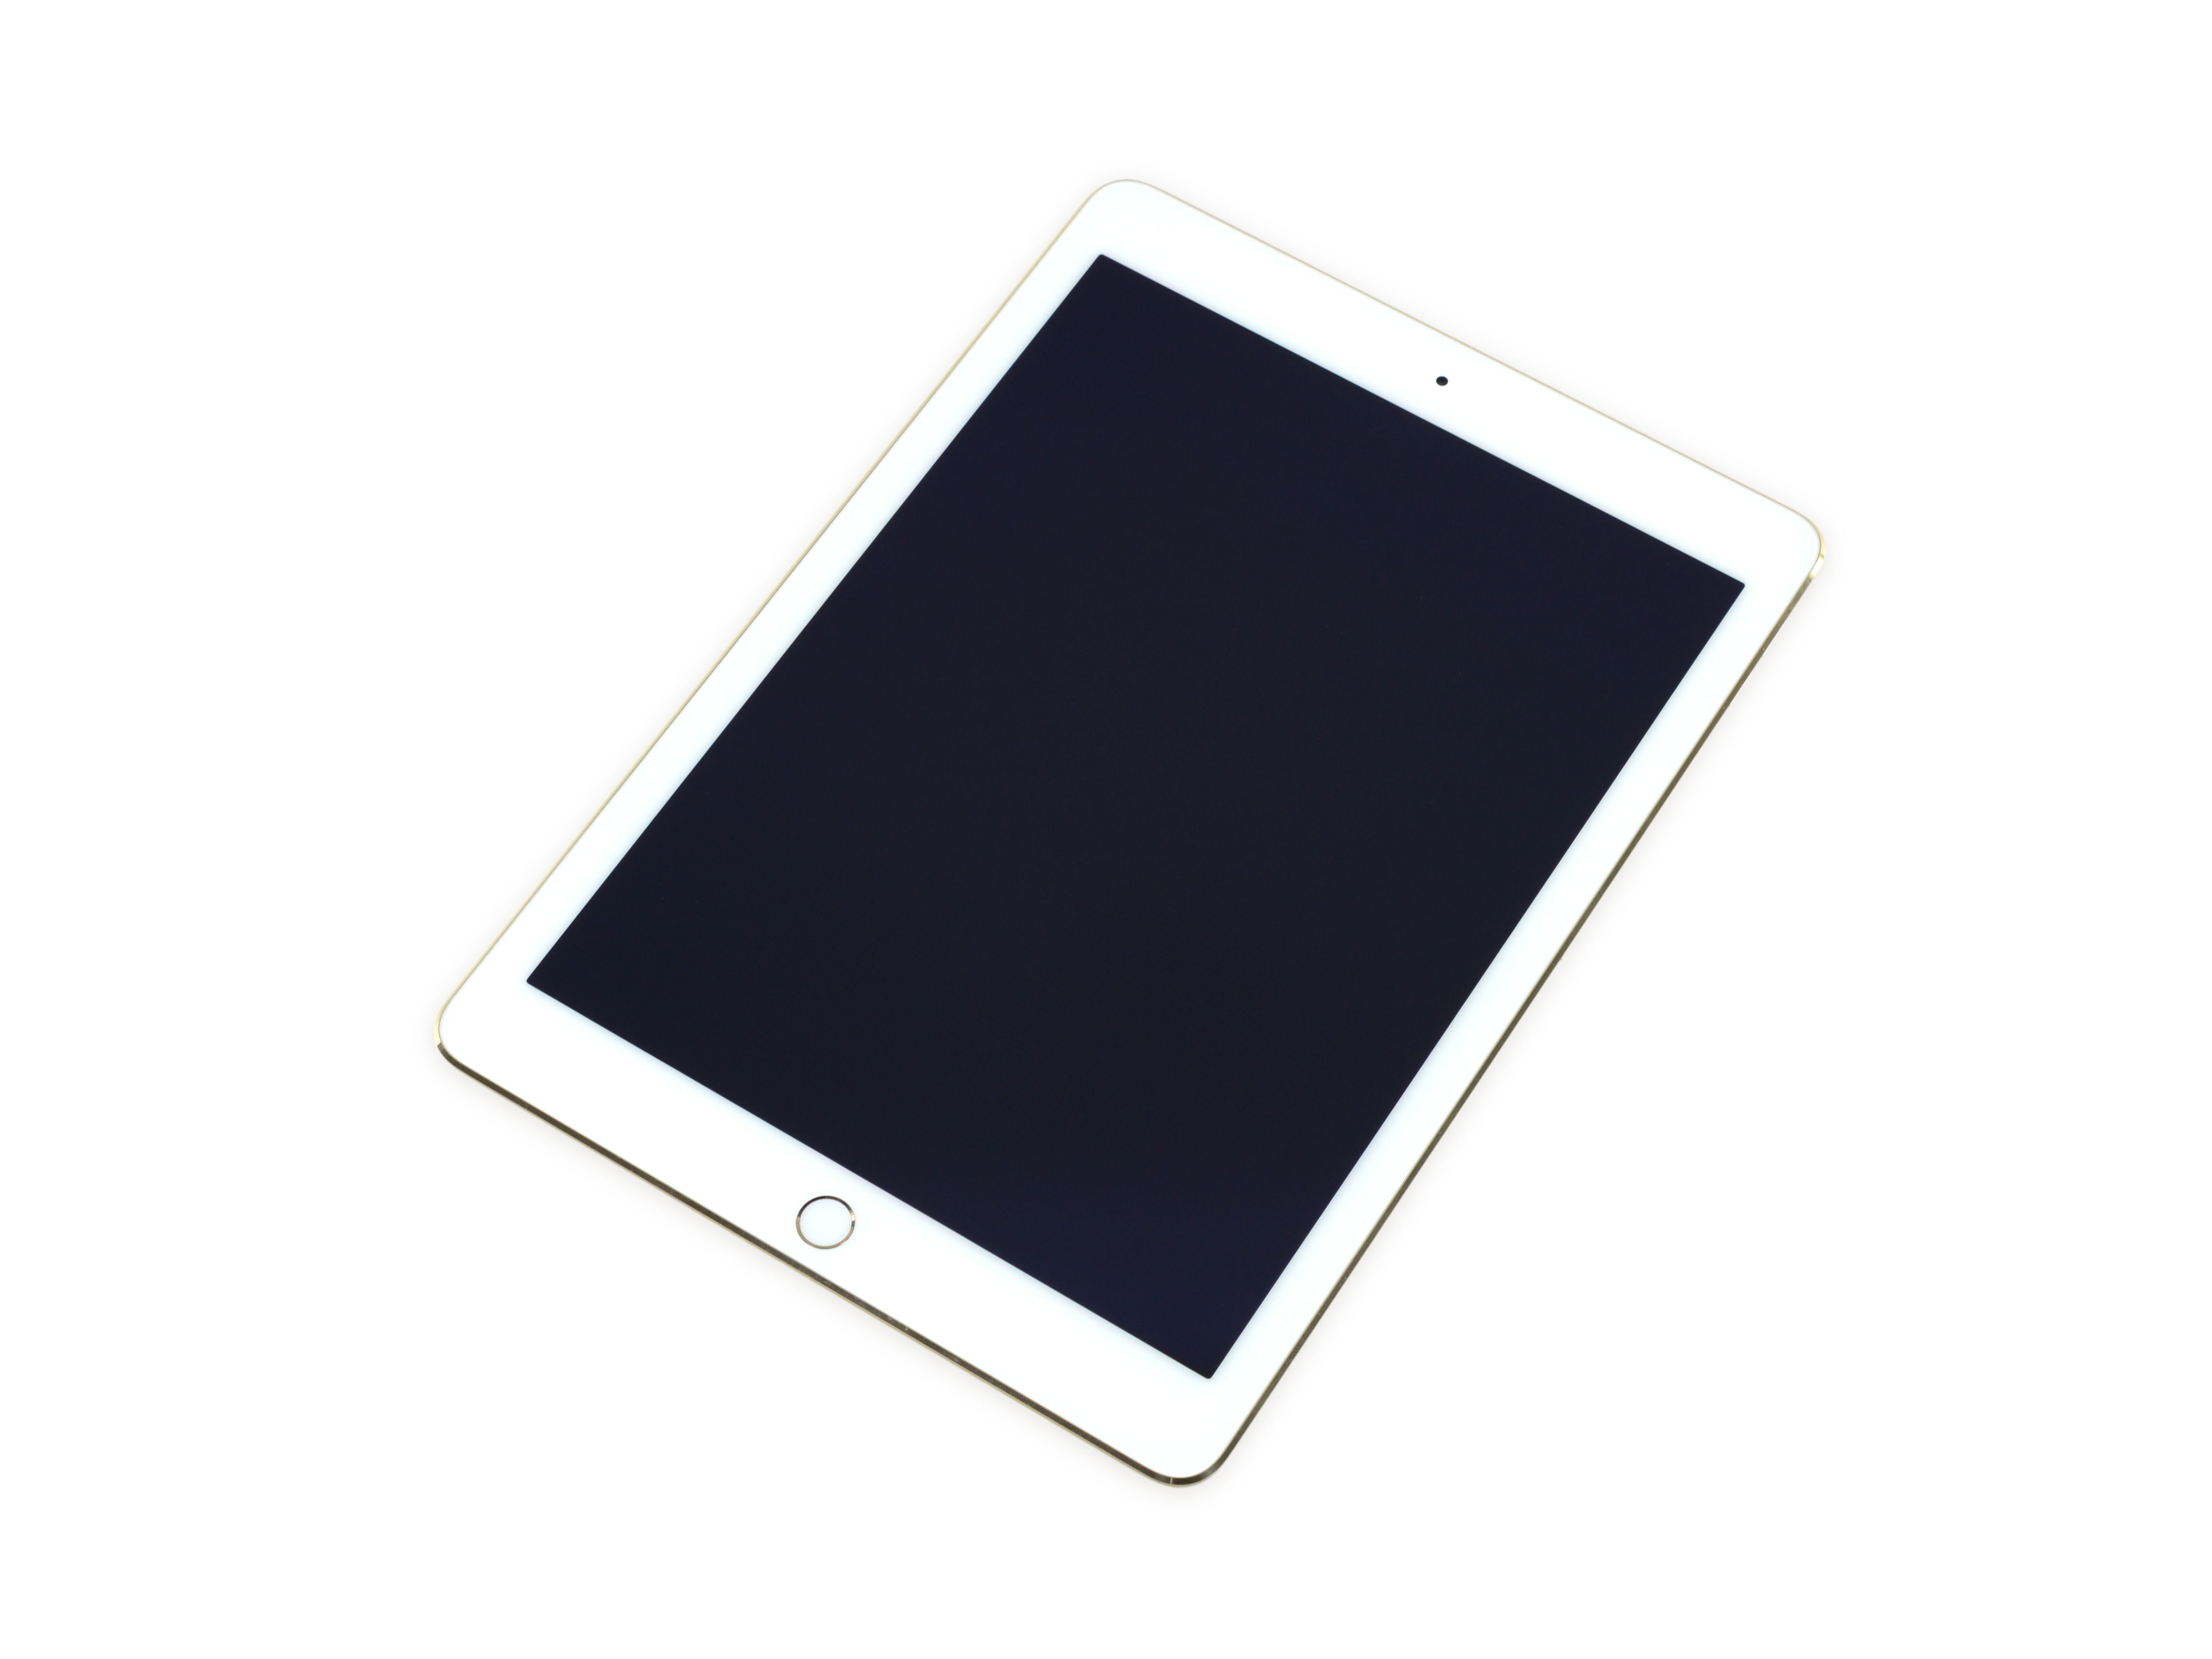 Desmontagem do iPad Air 2